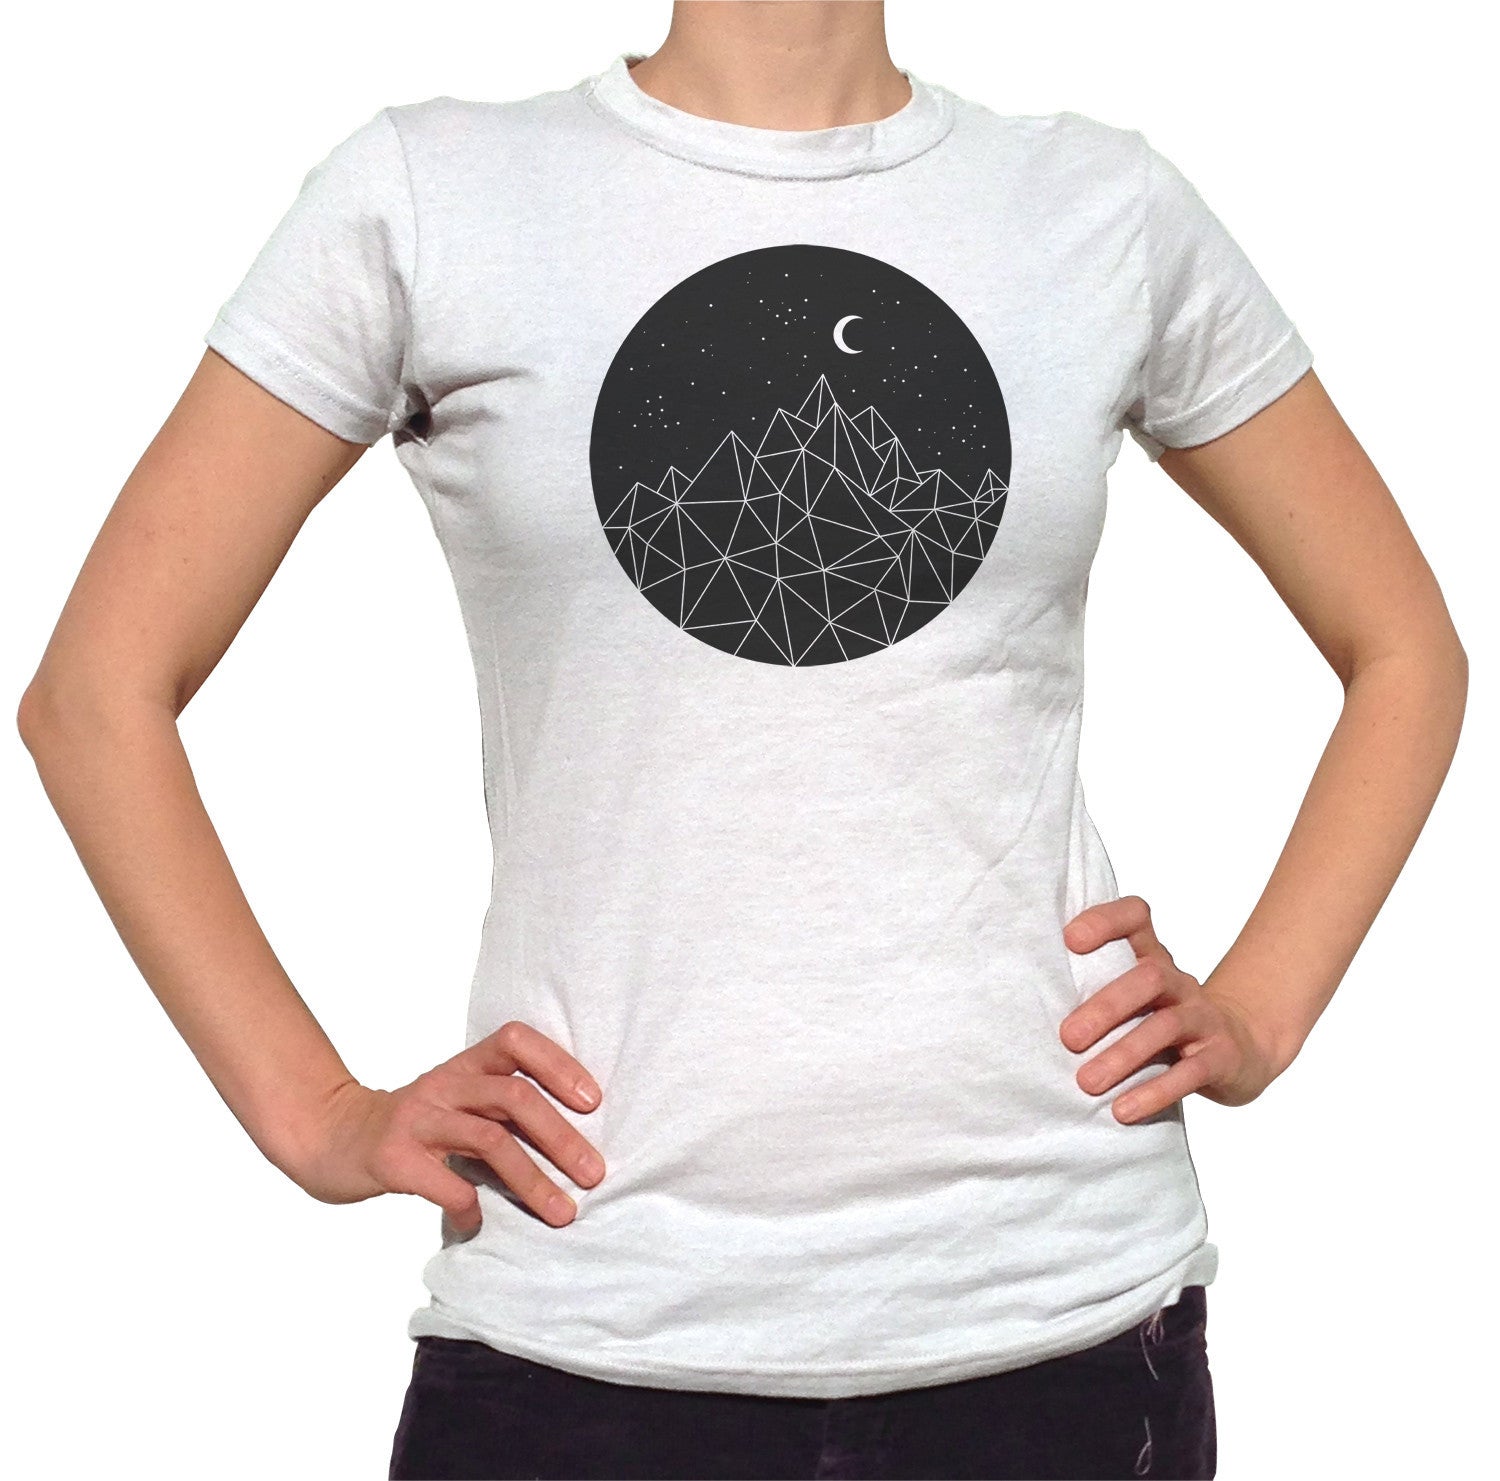 Women's Geometric Night T-Shirt